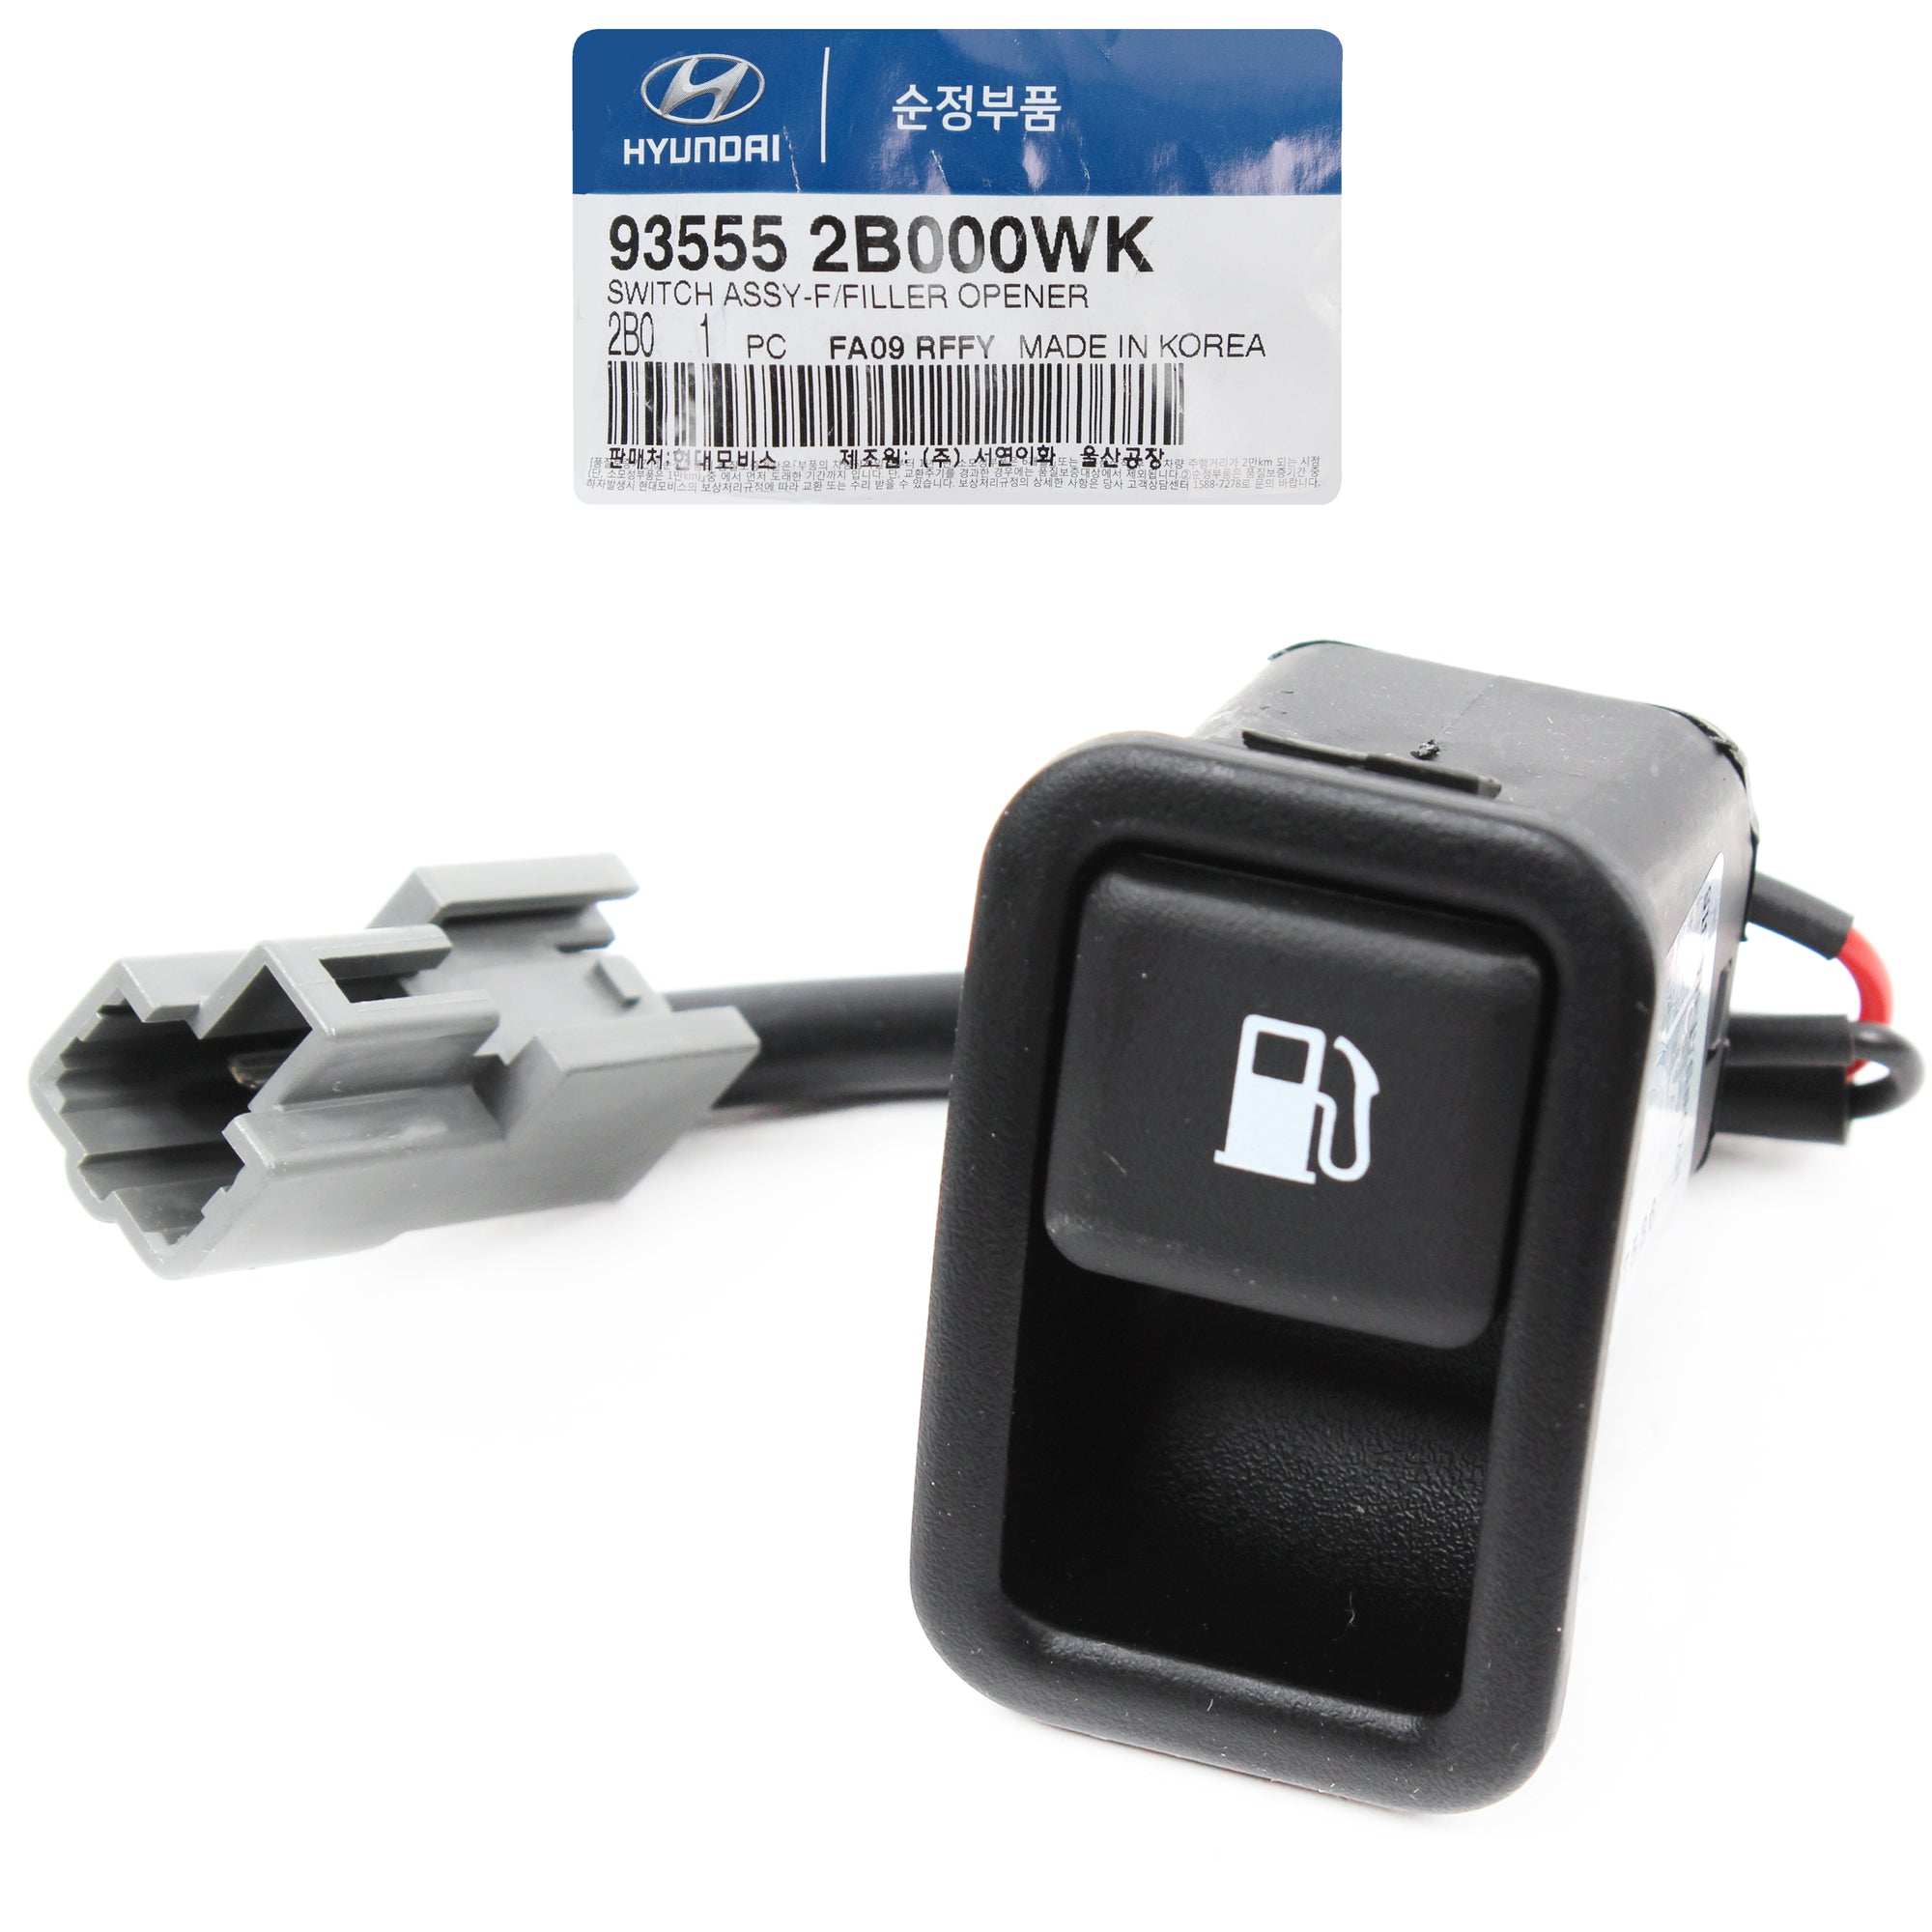 GENUINE Fuel Gas Door Opener Button Switch BLACK for 07-09 Santa Fe 935552B000WK